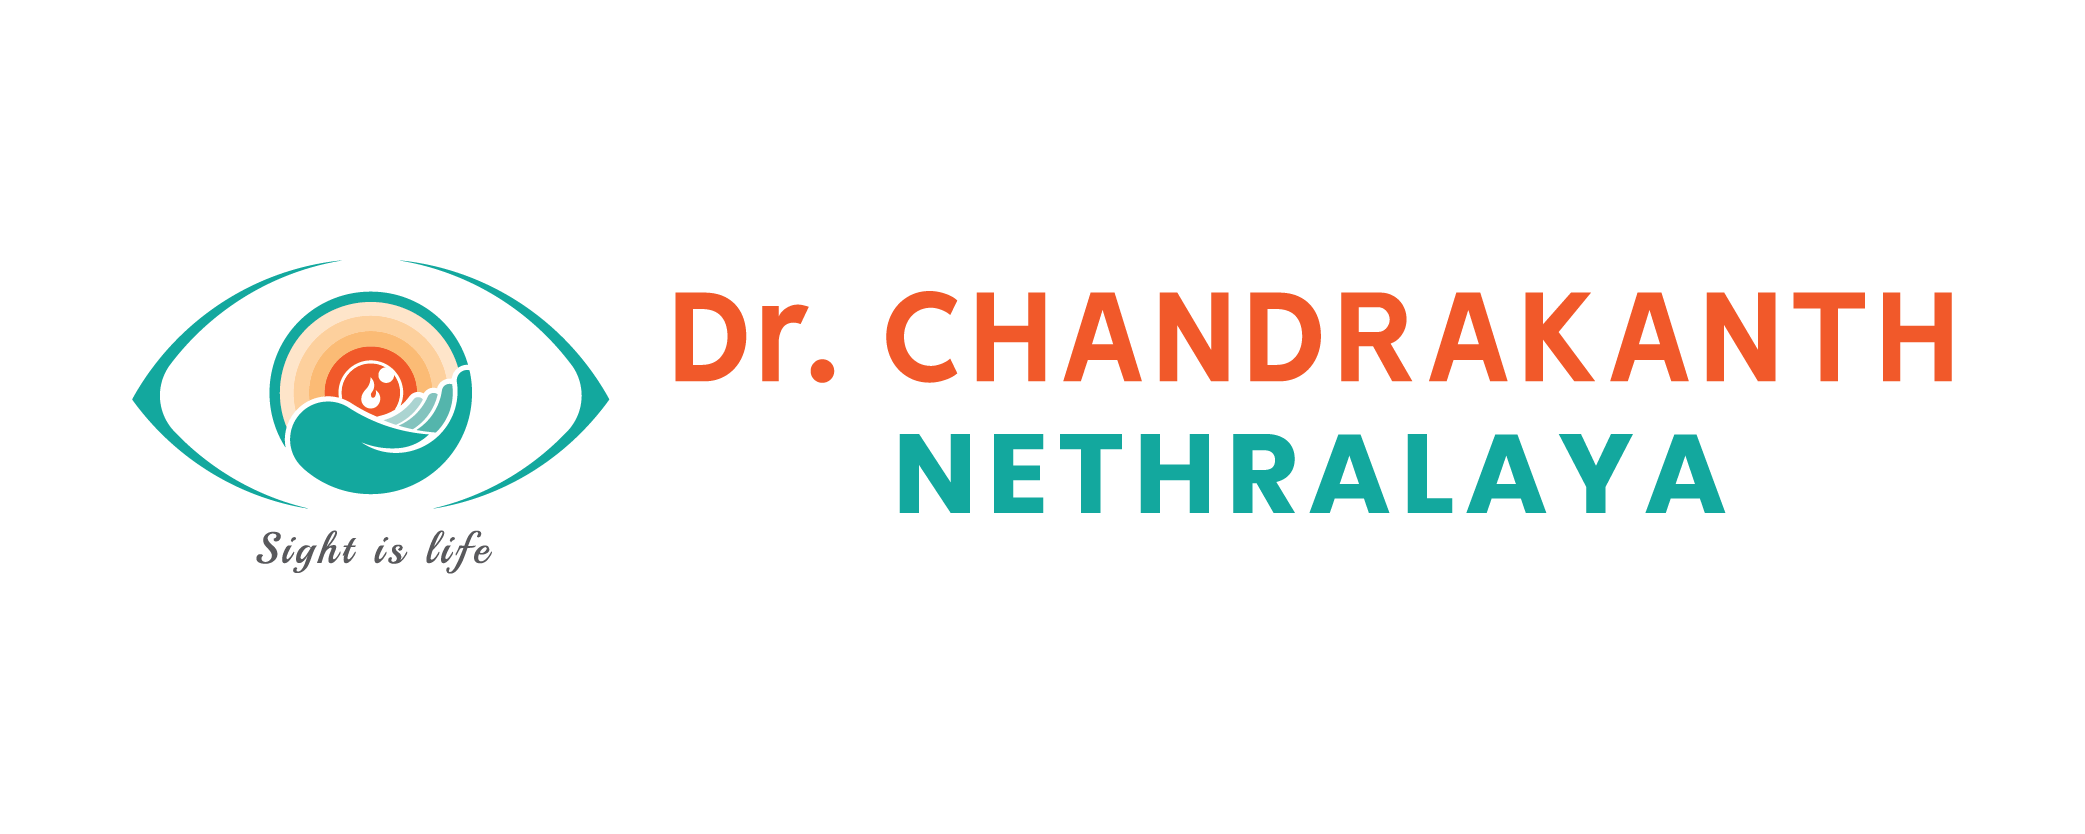 Dr Chandrakanth Nethralaya